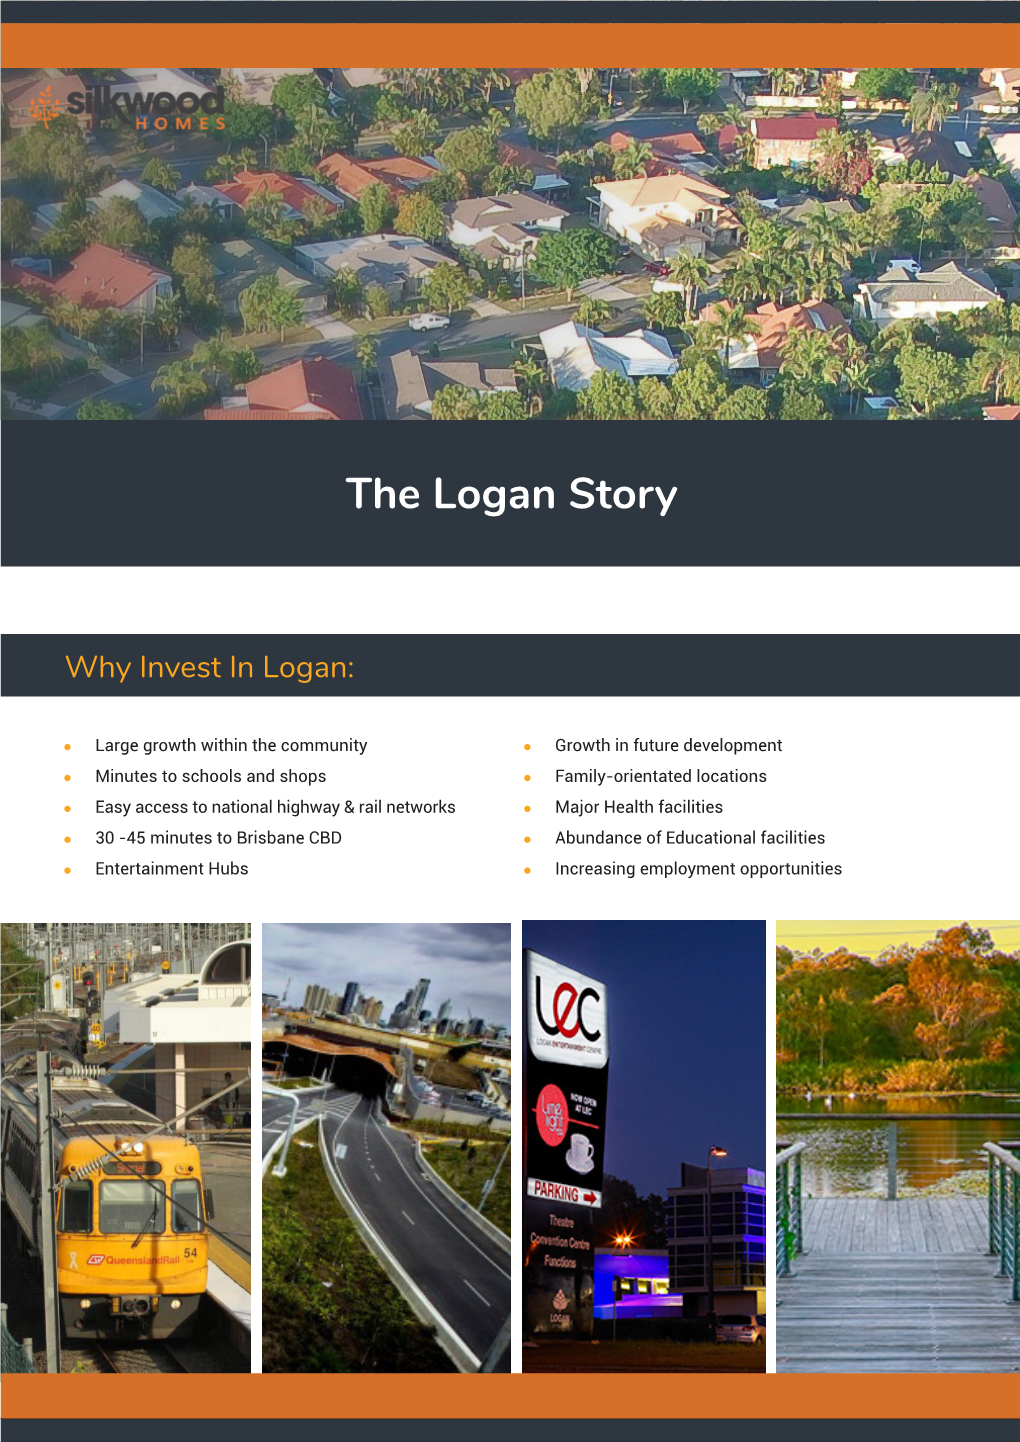 The Logan Story